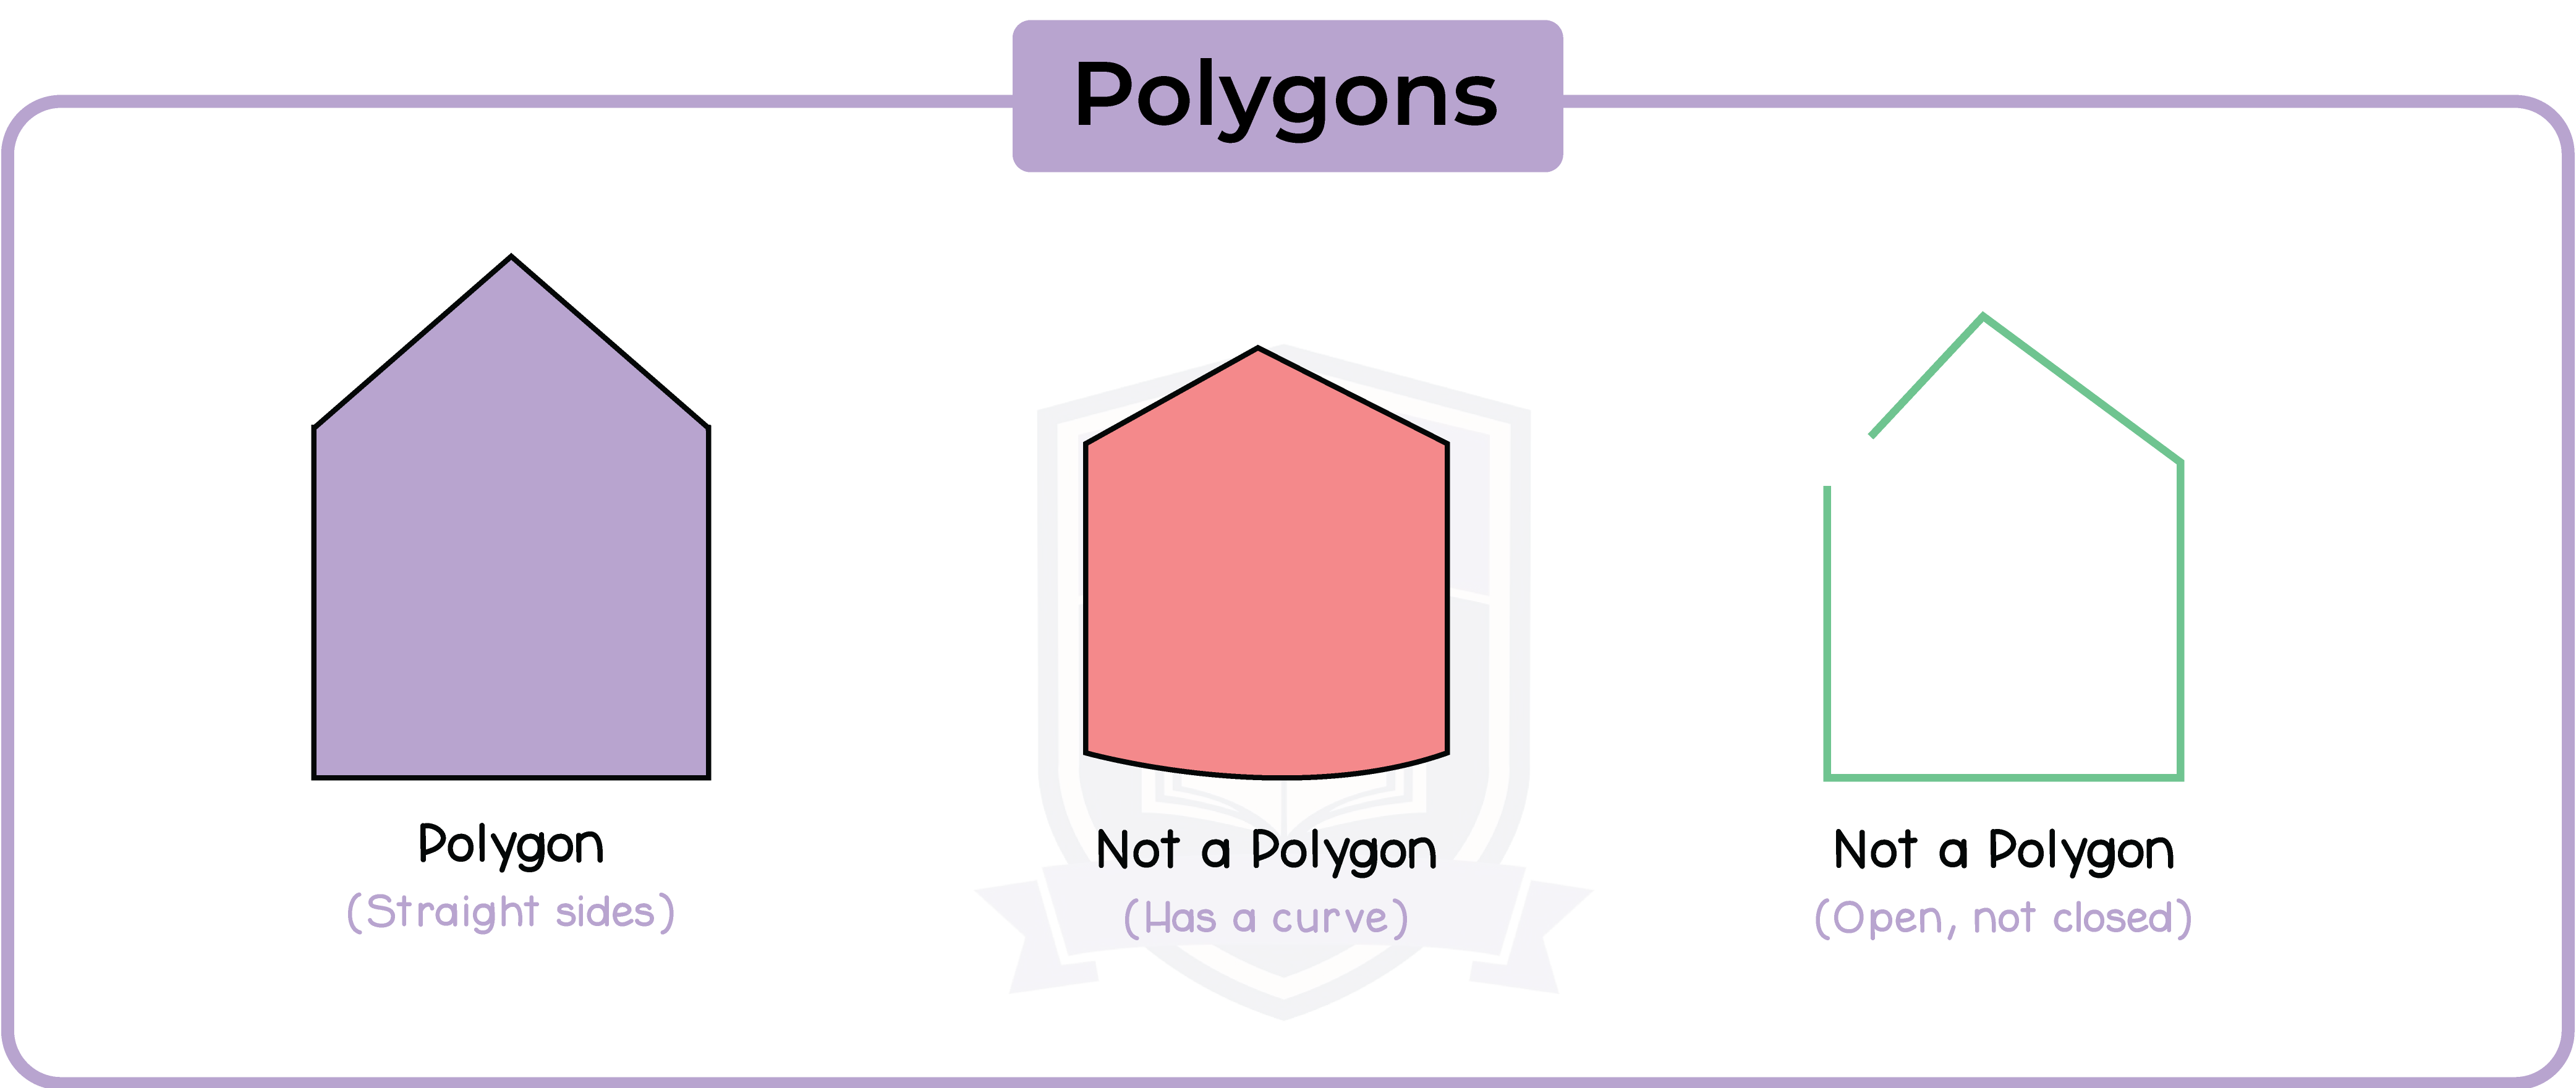 edexcel_igcse_mathematics a_topic 26_polygons_001_Polygons